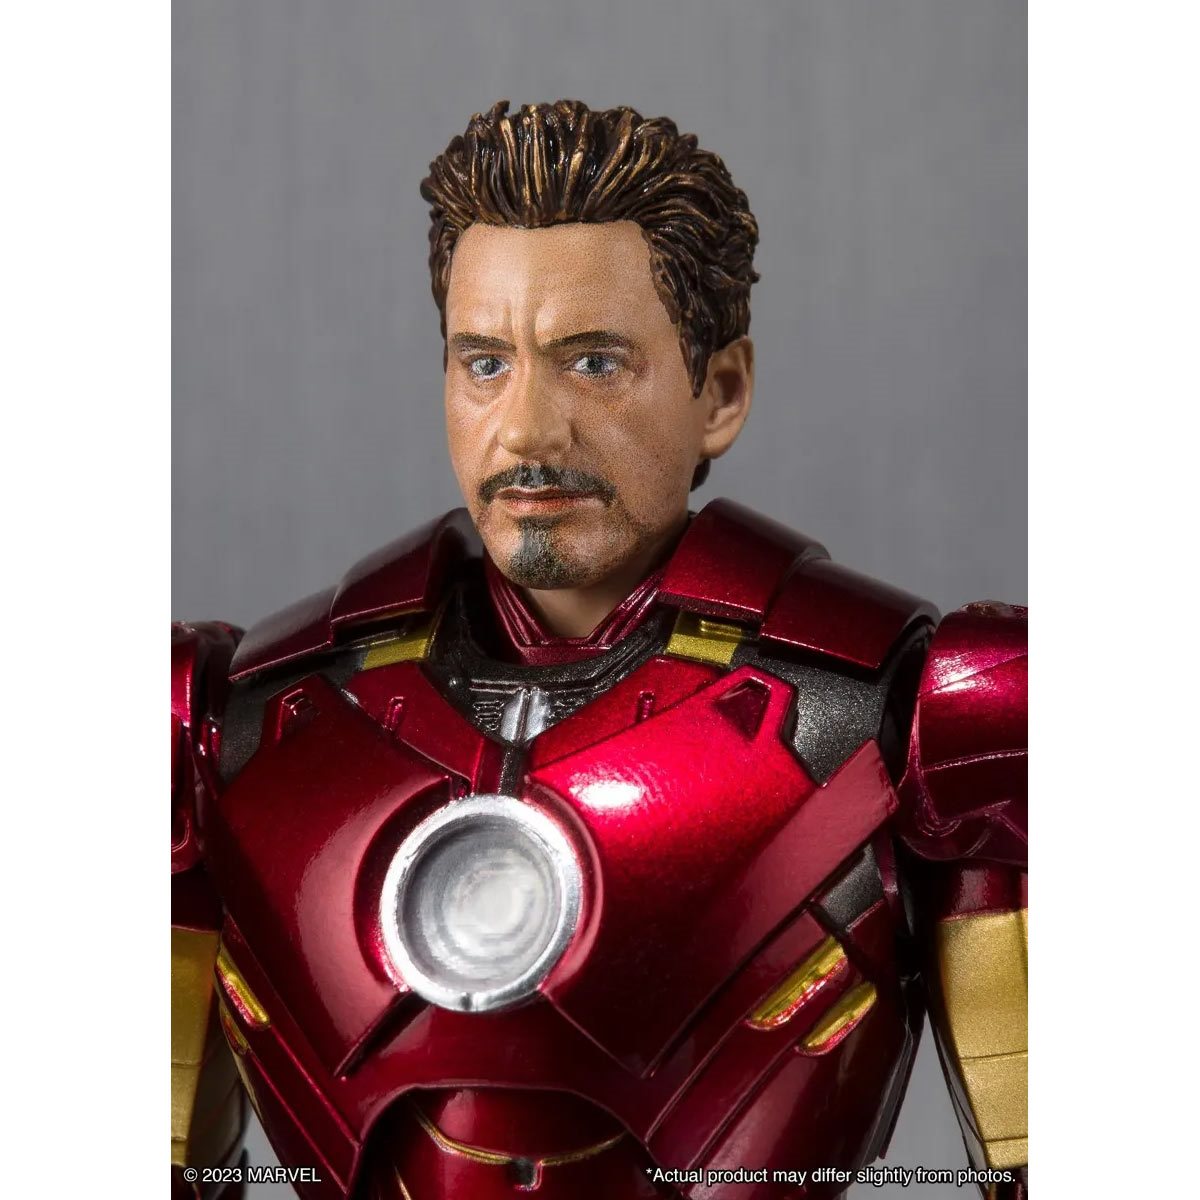 Bandai Tamashii Nations SH Figuarts: Marvel Iron Man 2 - Iron Man Mark IV 15 Aniversario Figura De Accion